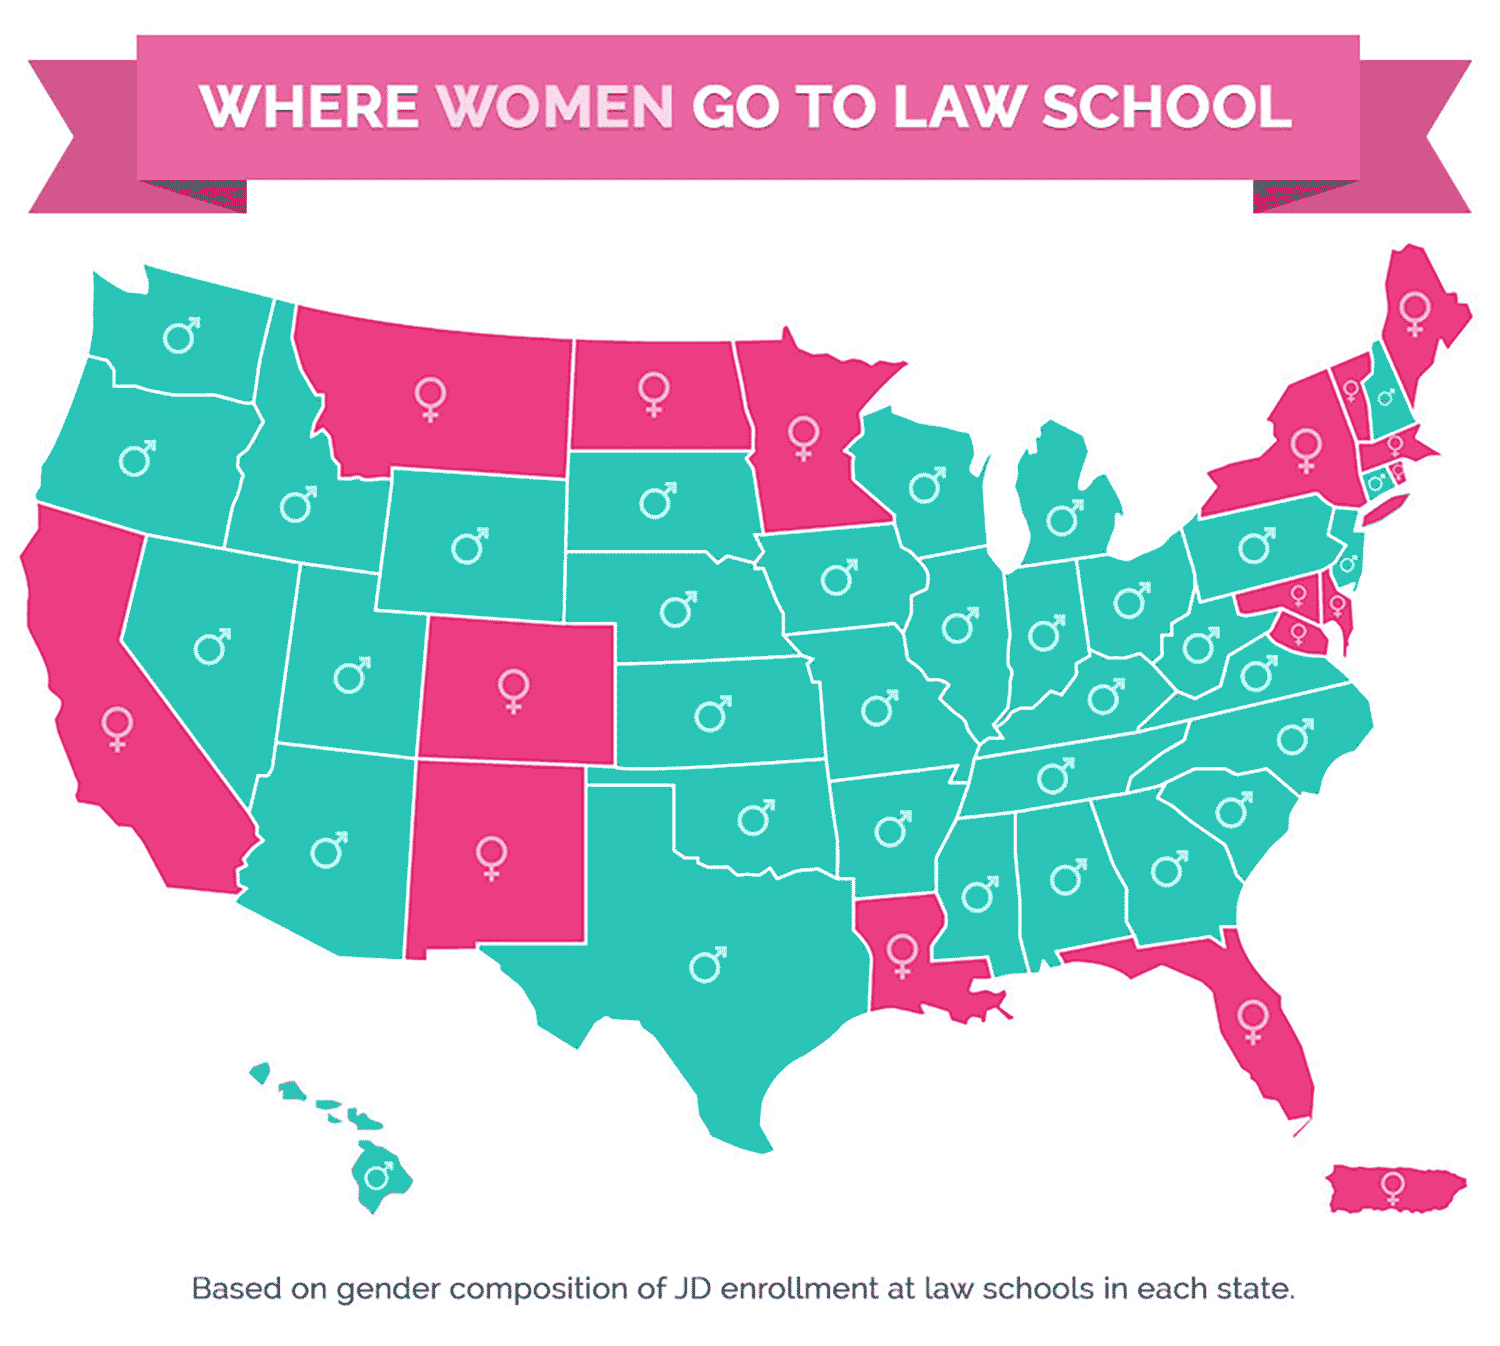 Where women go to law school in 2016